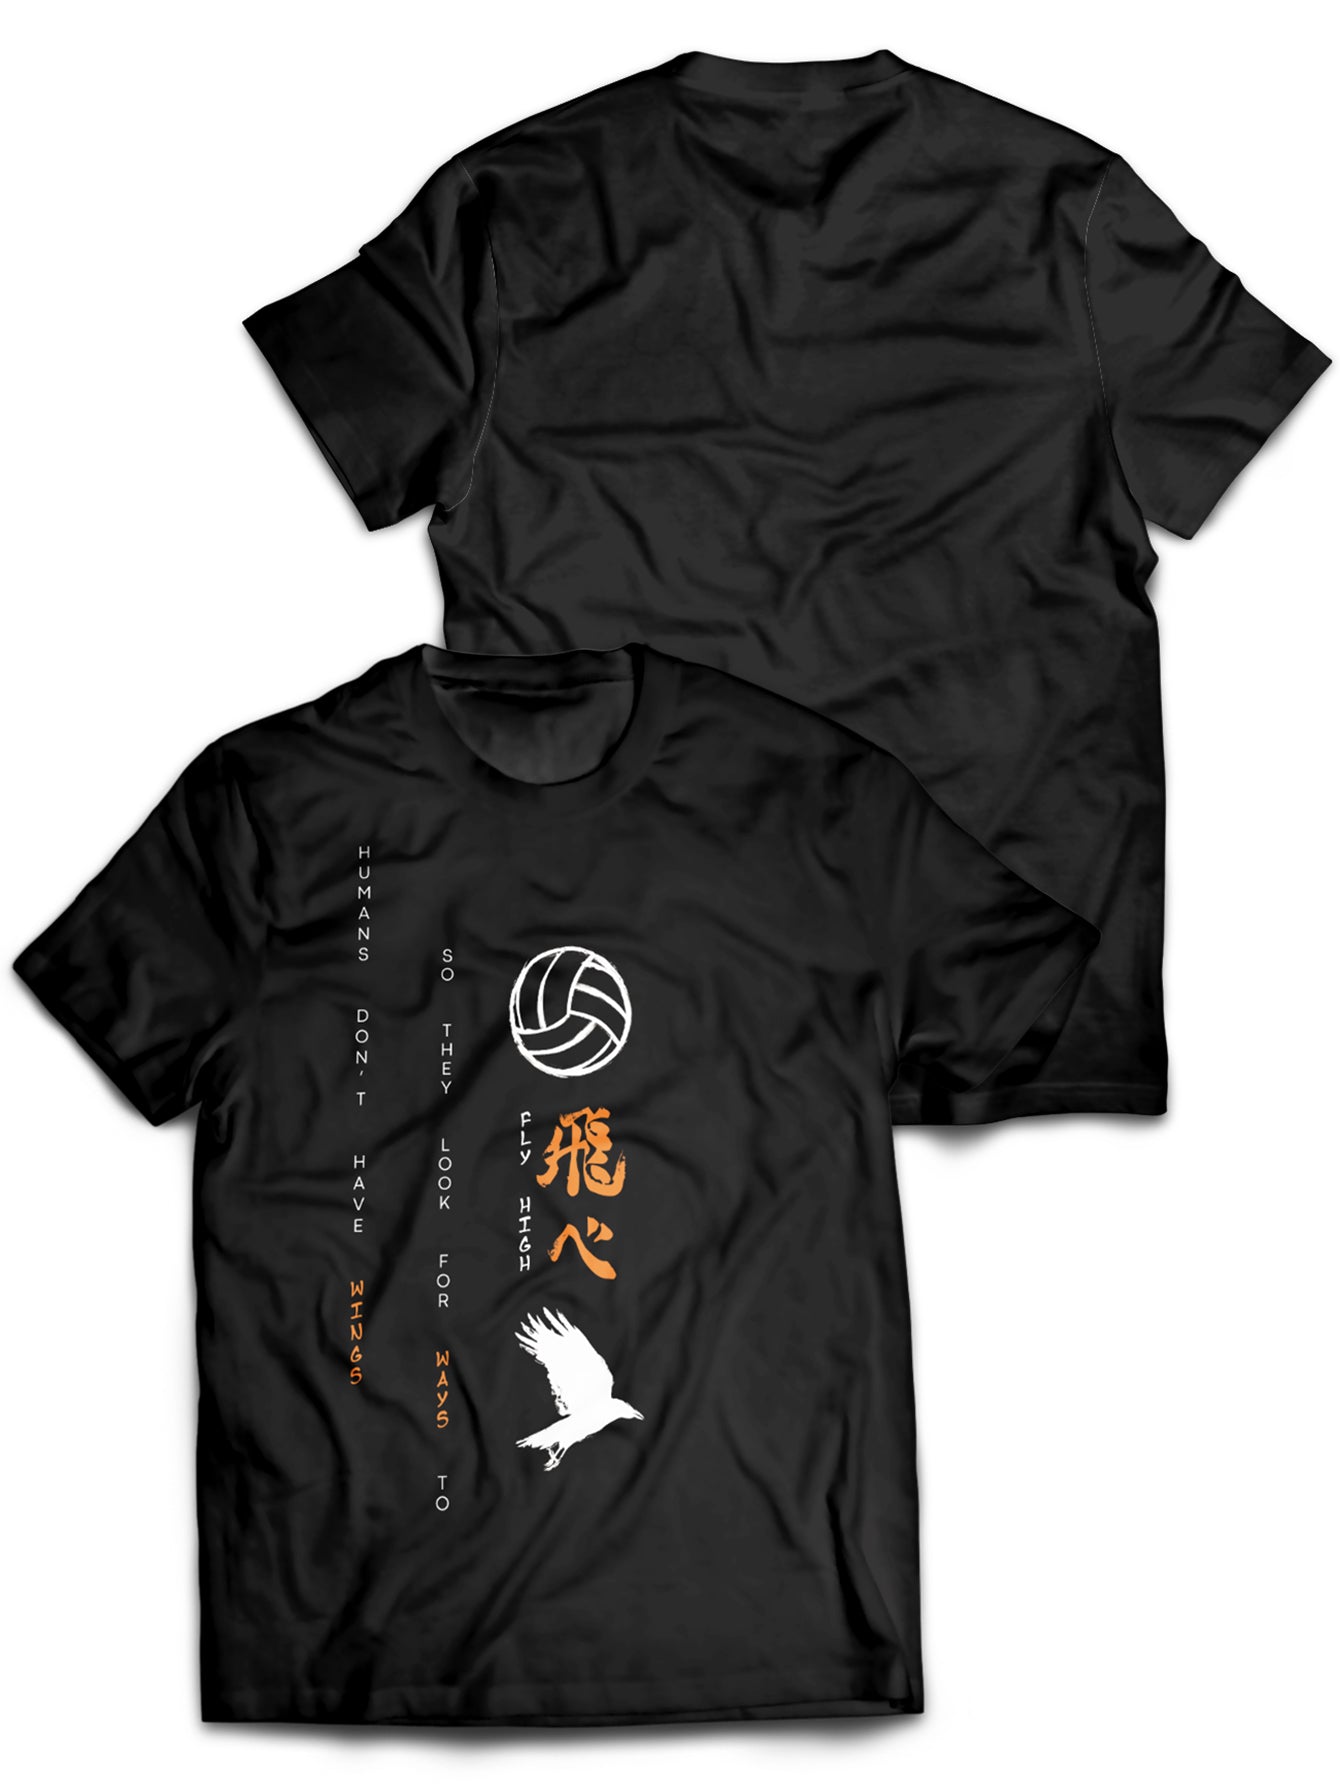 Fandomaniax - You Can Fly High Unisex T-Shirt